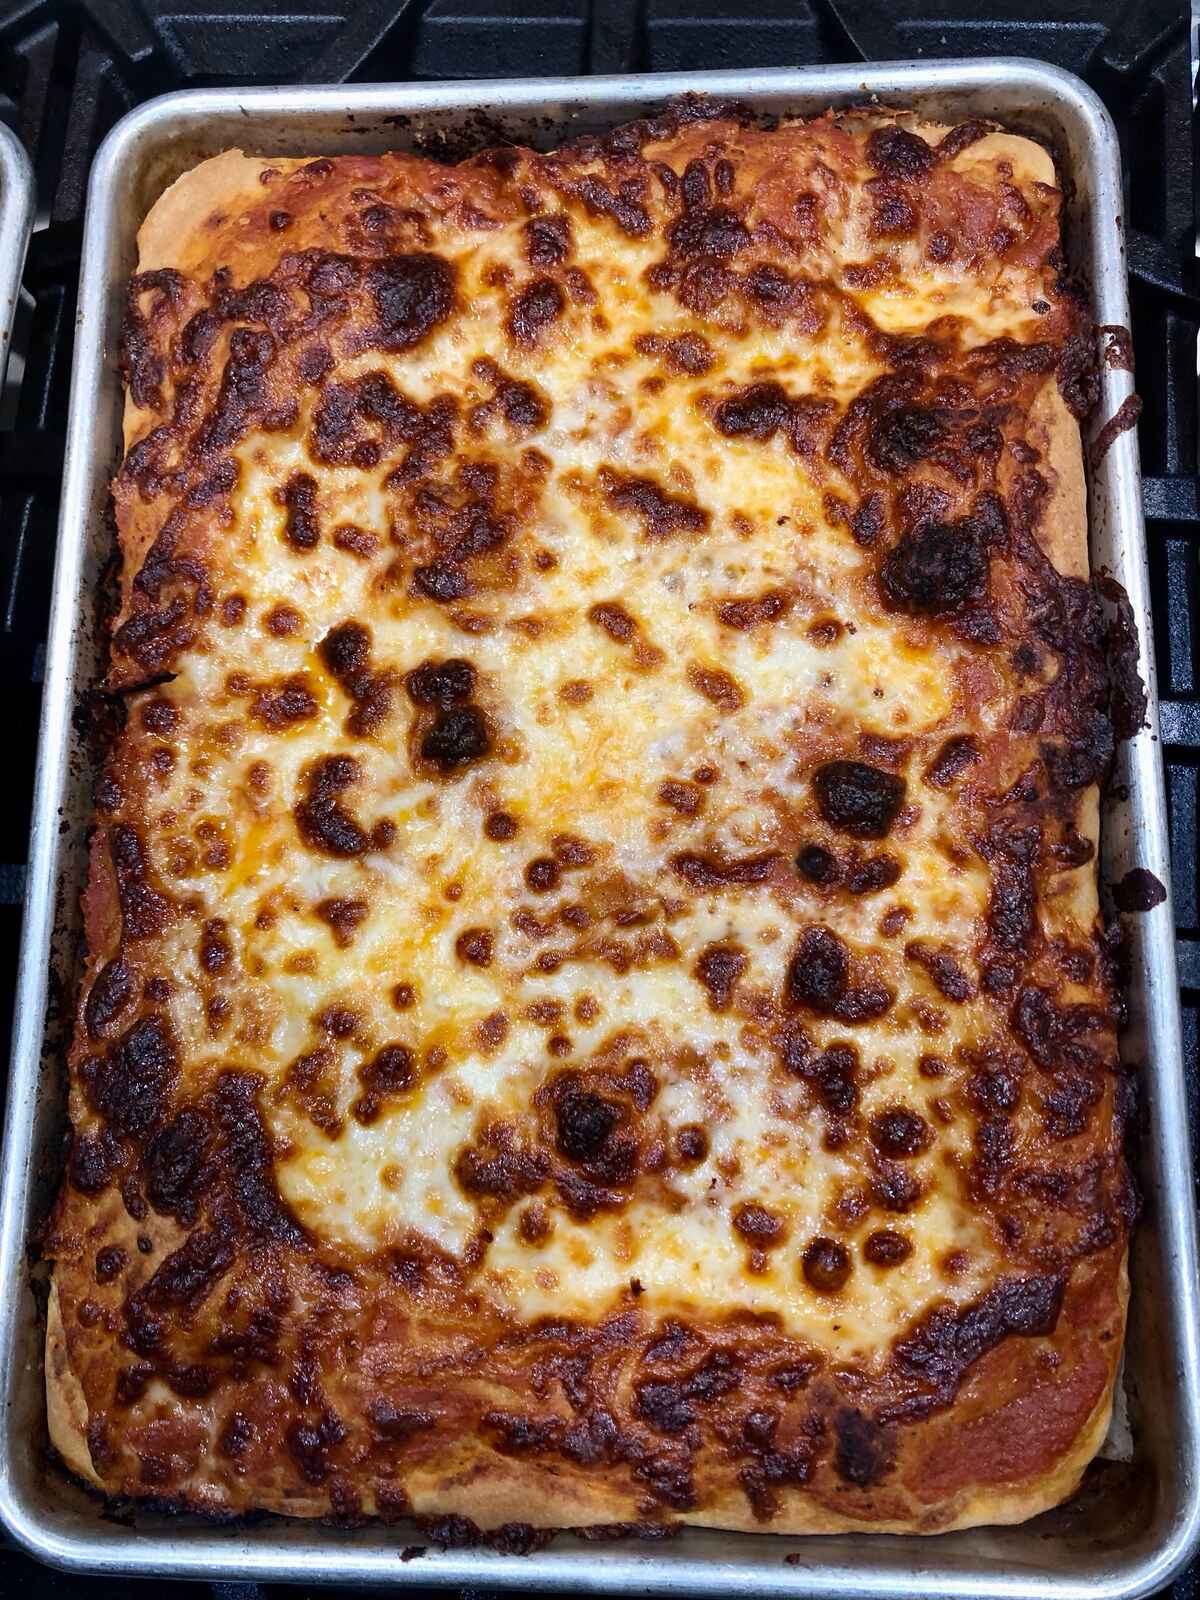 A rectangular cheese pizza, Sicilian or “grandma” style